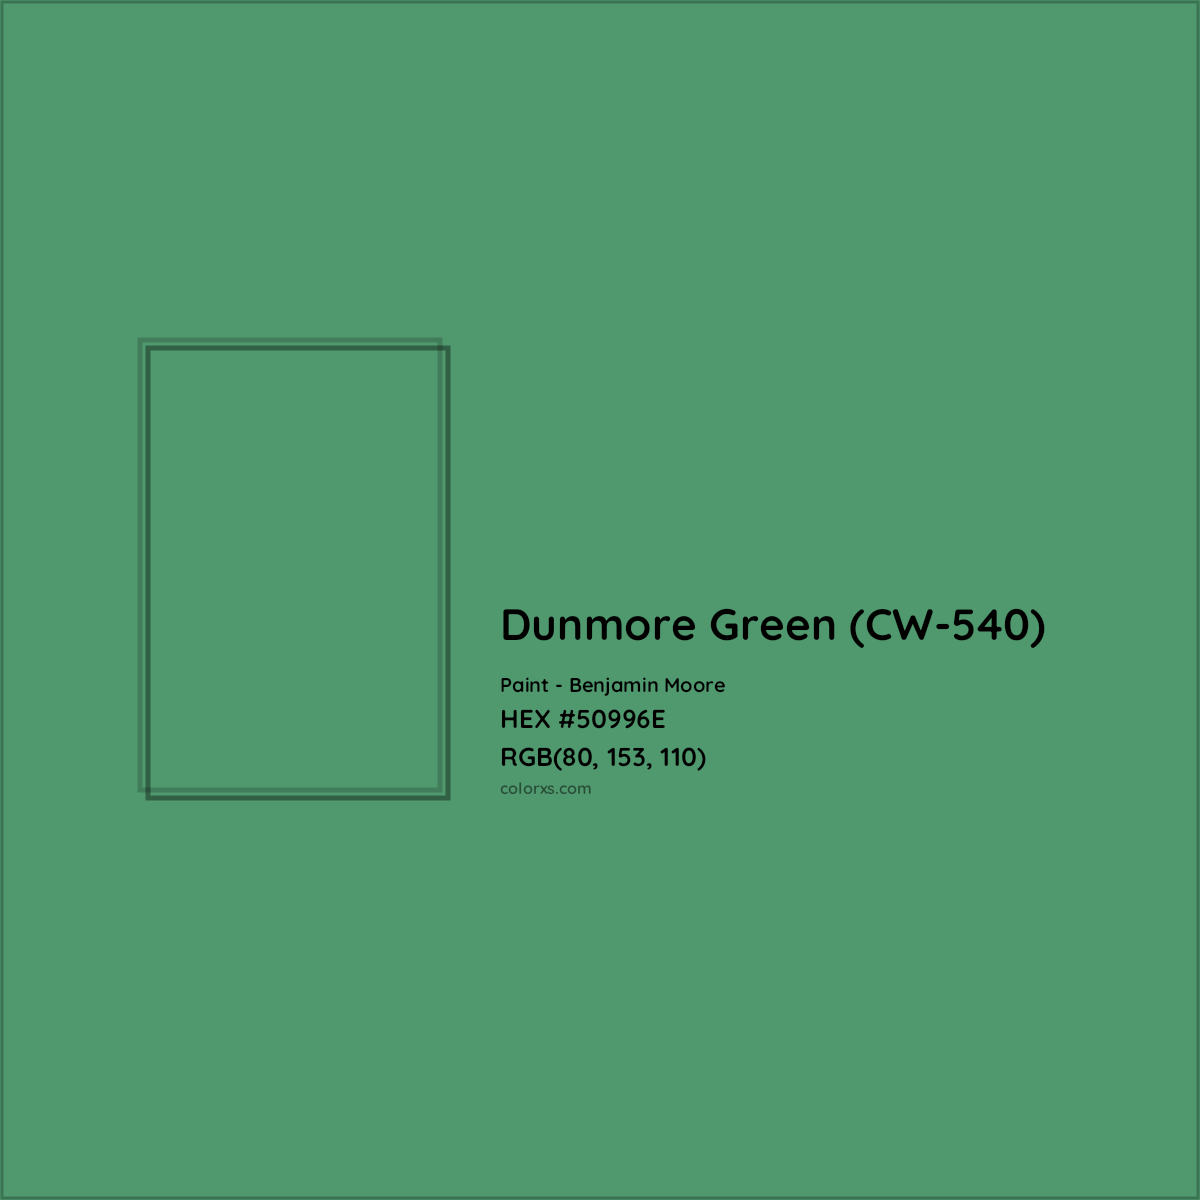 HEX #50996E Dunmore Green (CW-540) Paint Benjamin Moore - Color Code